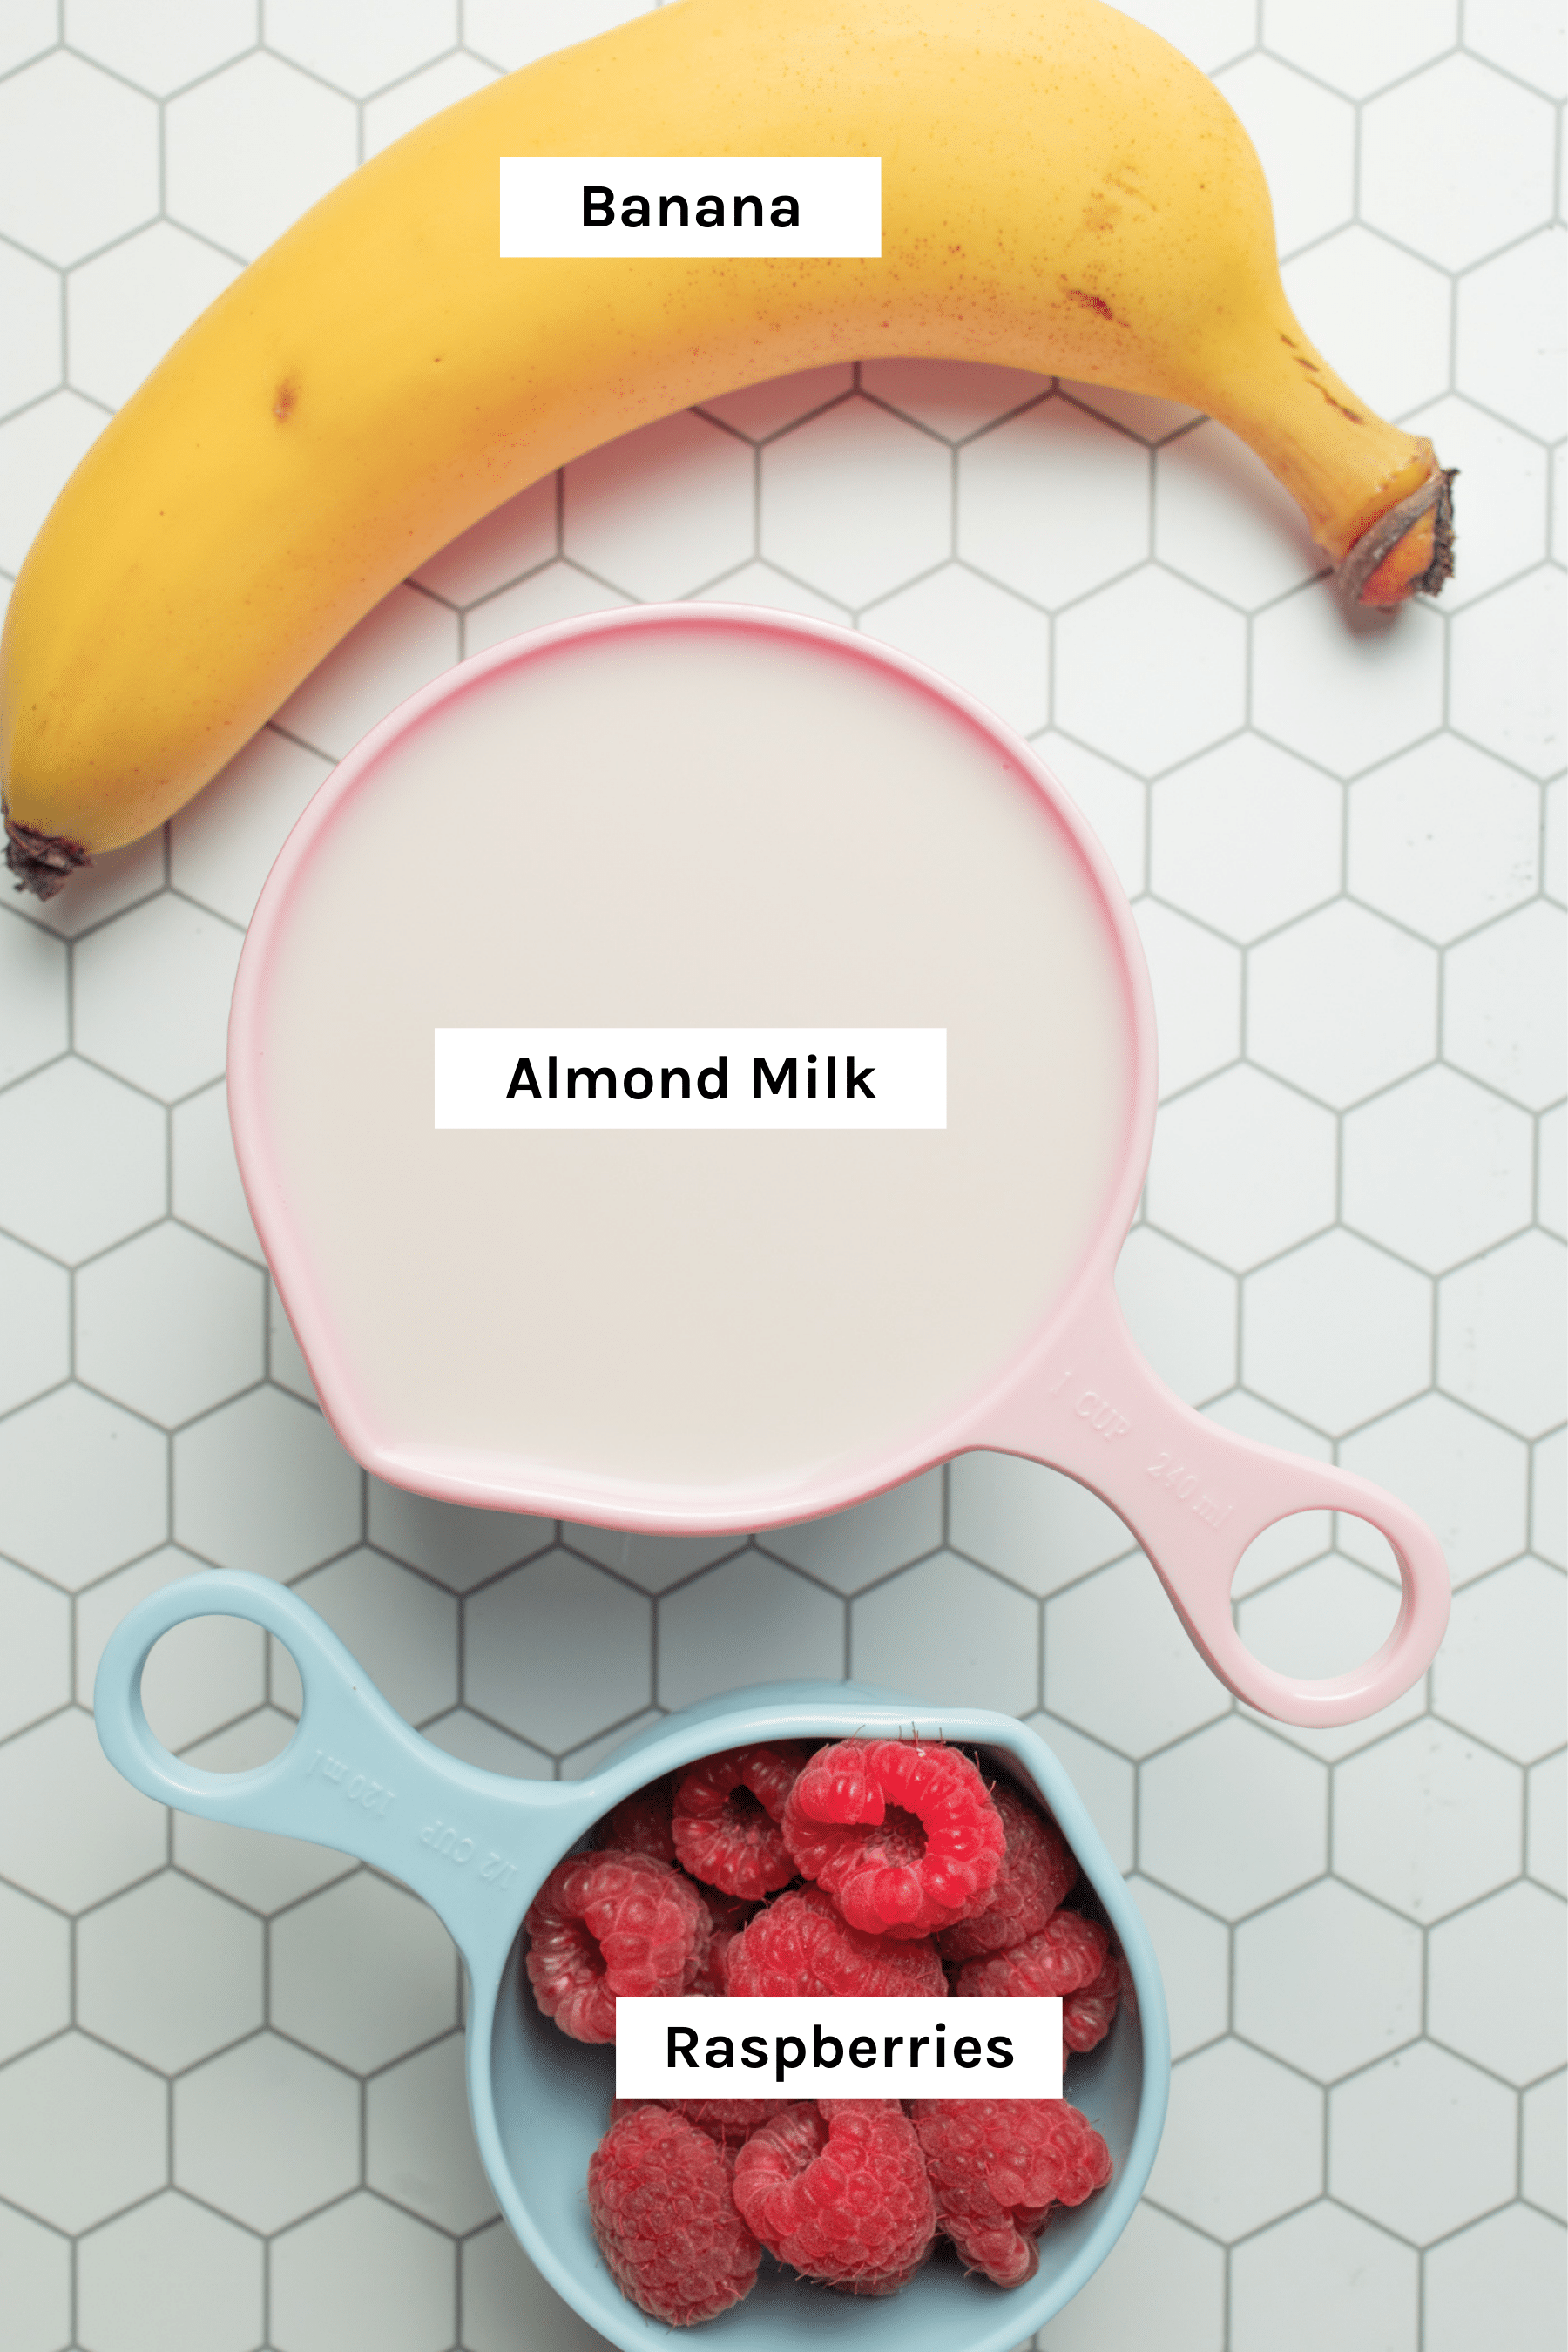 Recipe ingredients - banana, almond milk and raspberries/